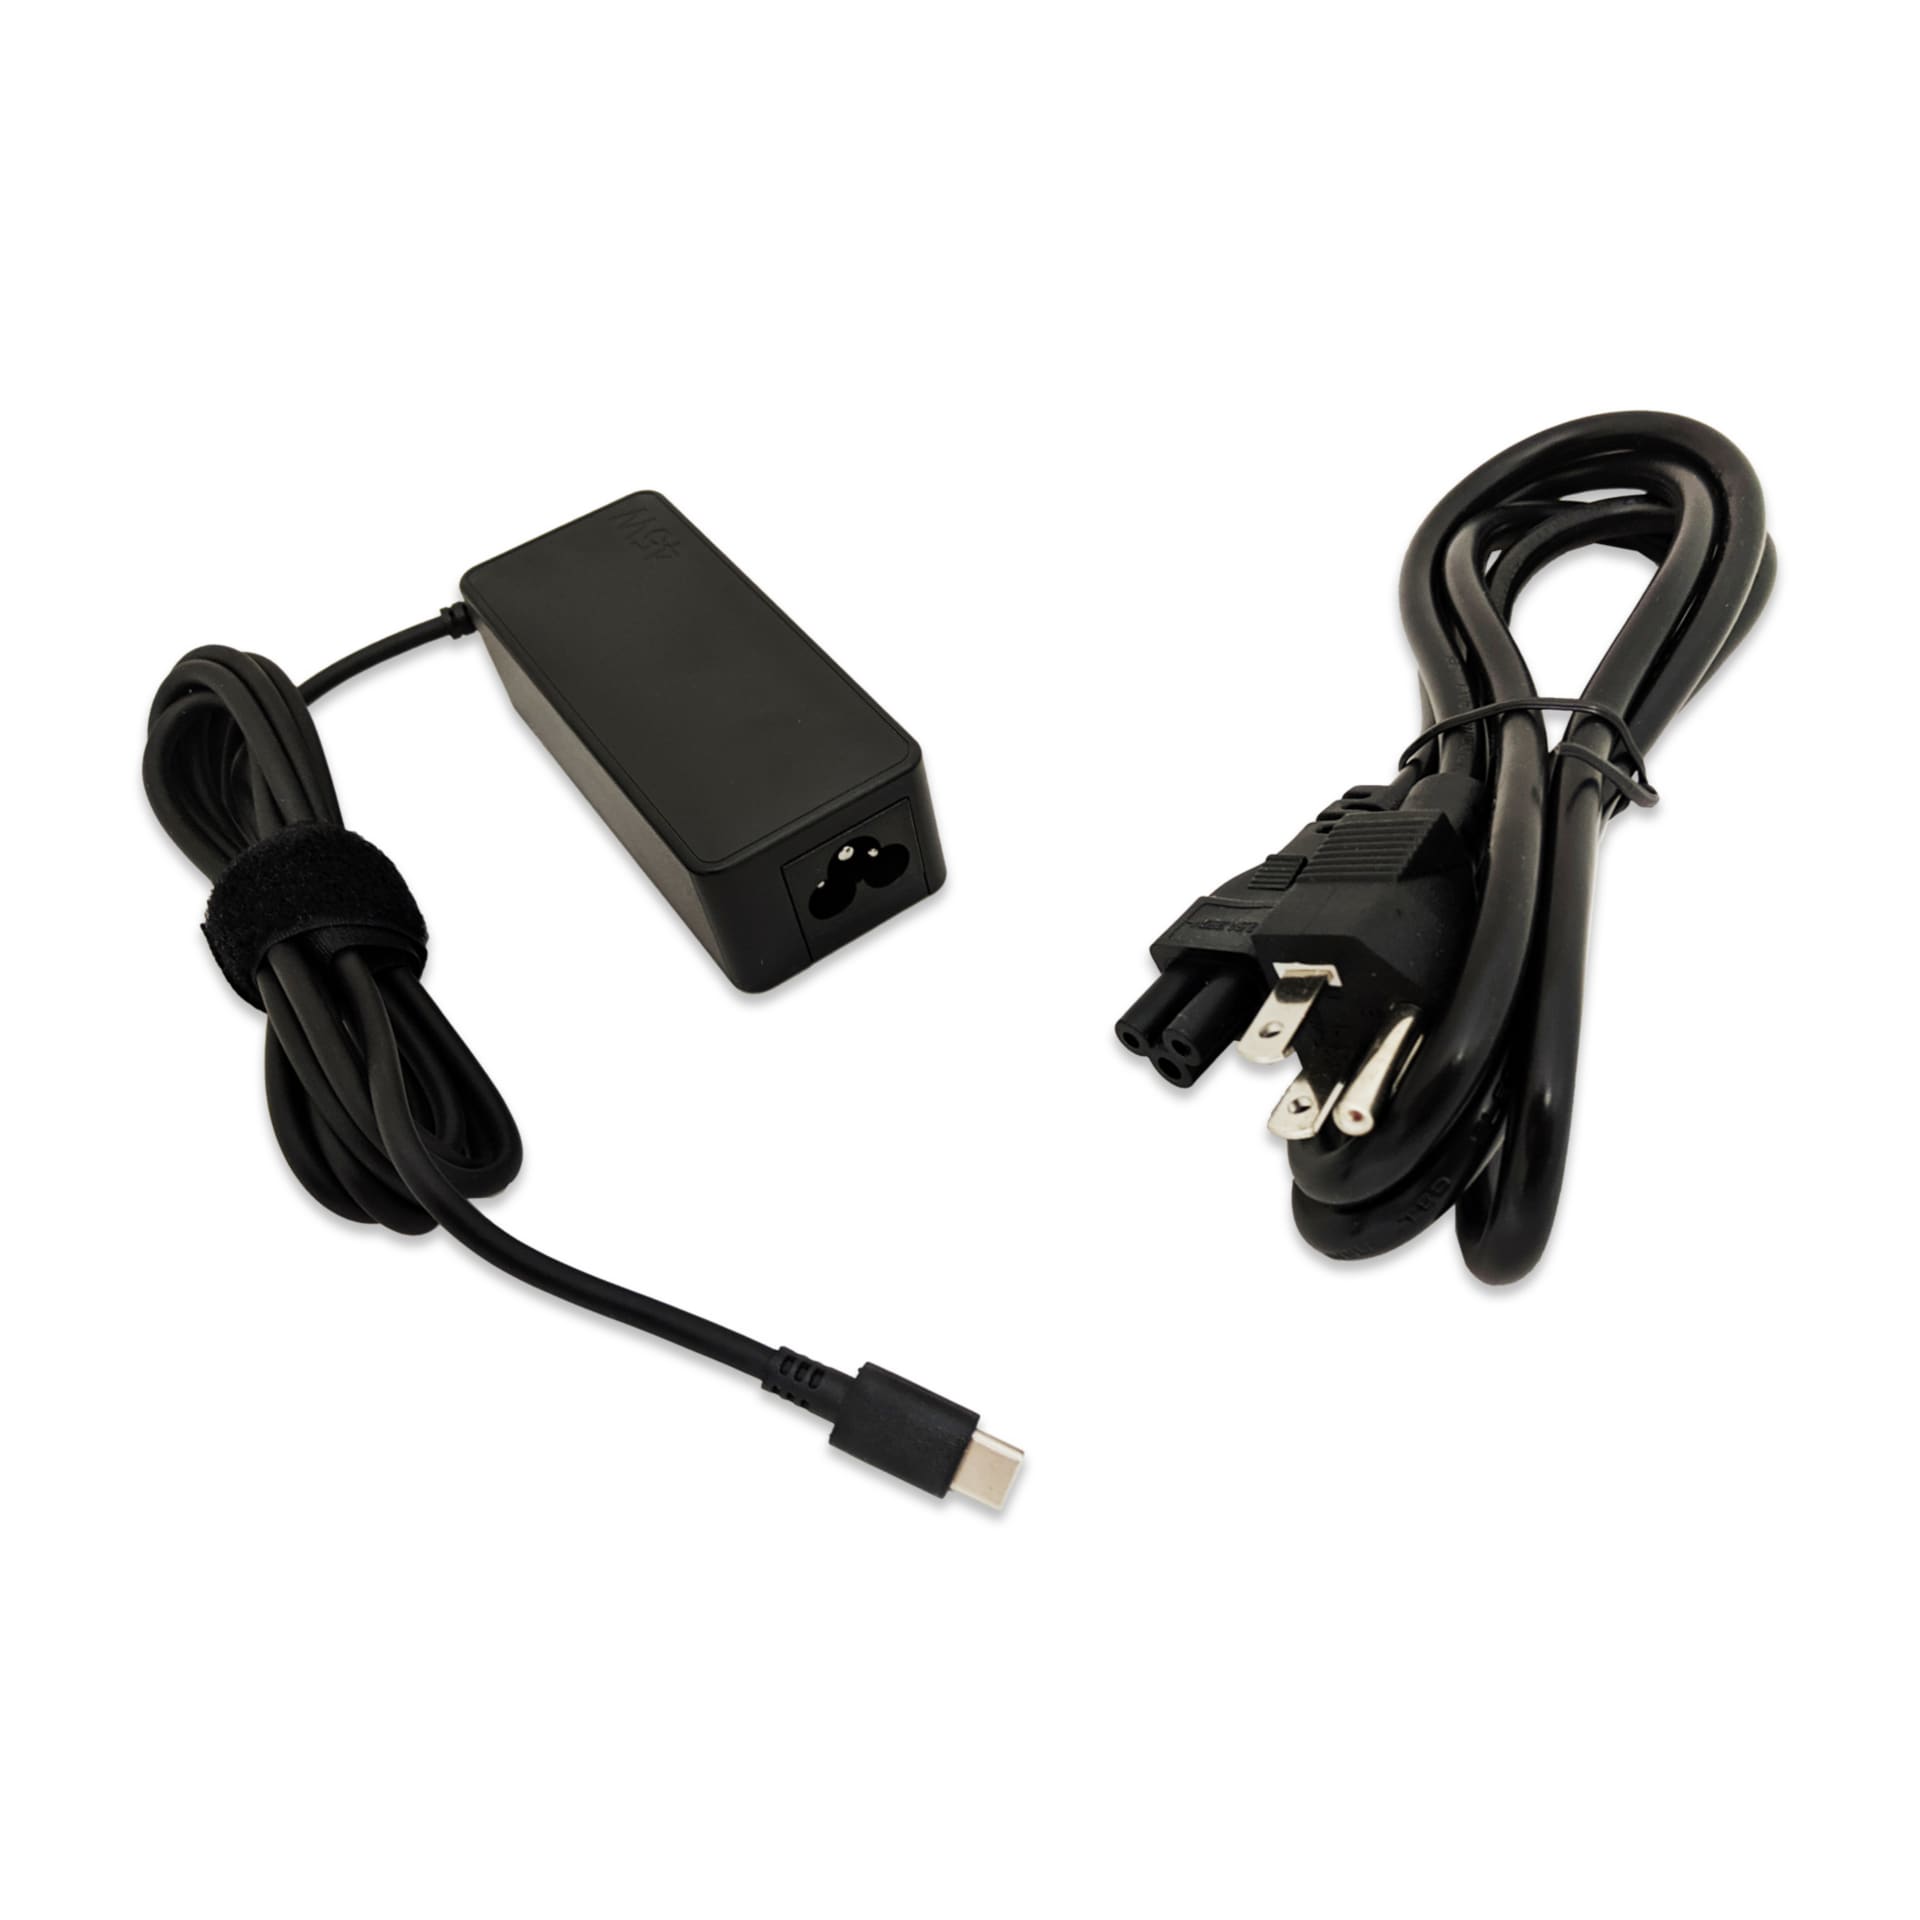 Hp EliteBook X360 1040 G8 charger / Hp EliteBook X360 1040 G8 ac adapter /  Hp EliteBook X360 1040 G8 power cable